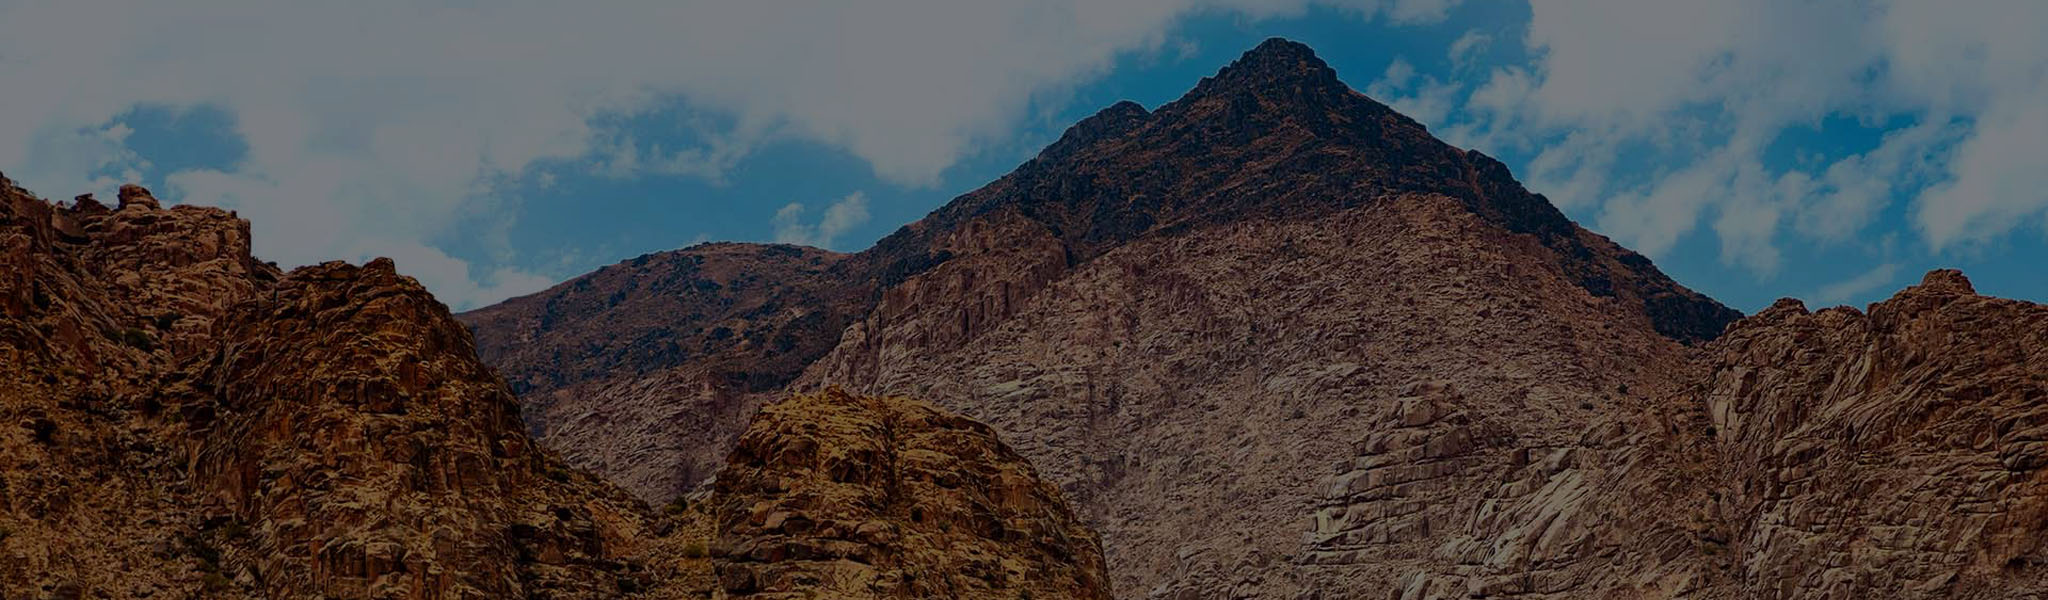 Mount Sinai In Saudi Arabia Burnt Blackened Peak With Blue Skies Living Passages Tour dark